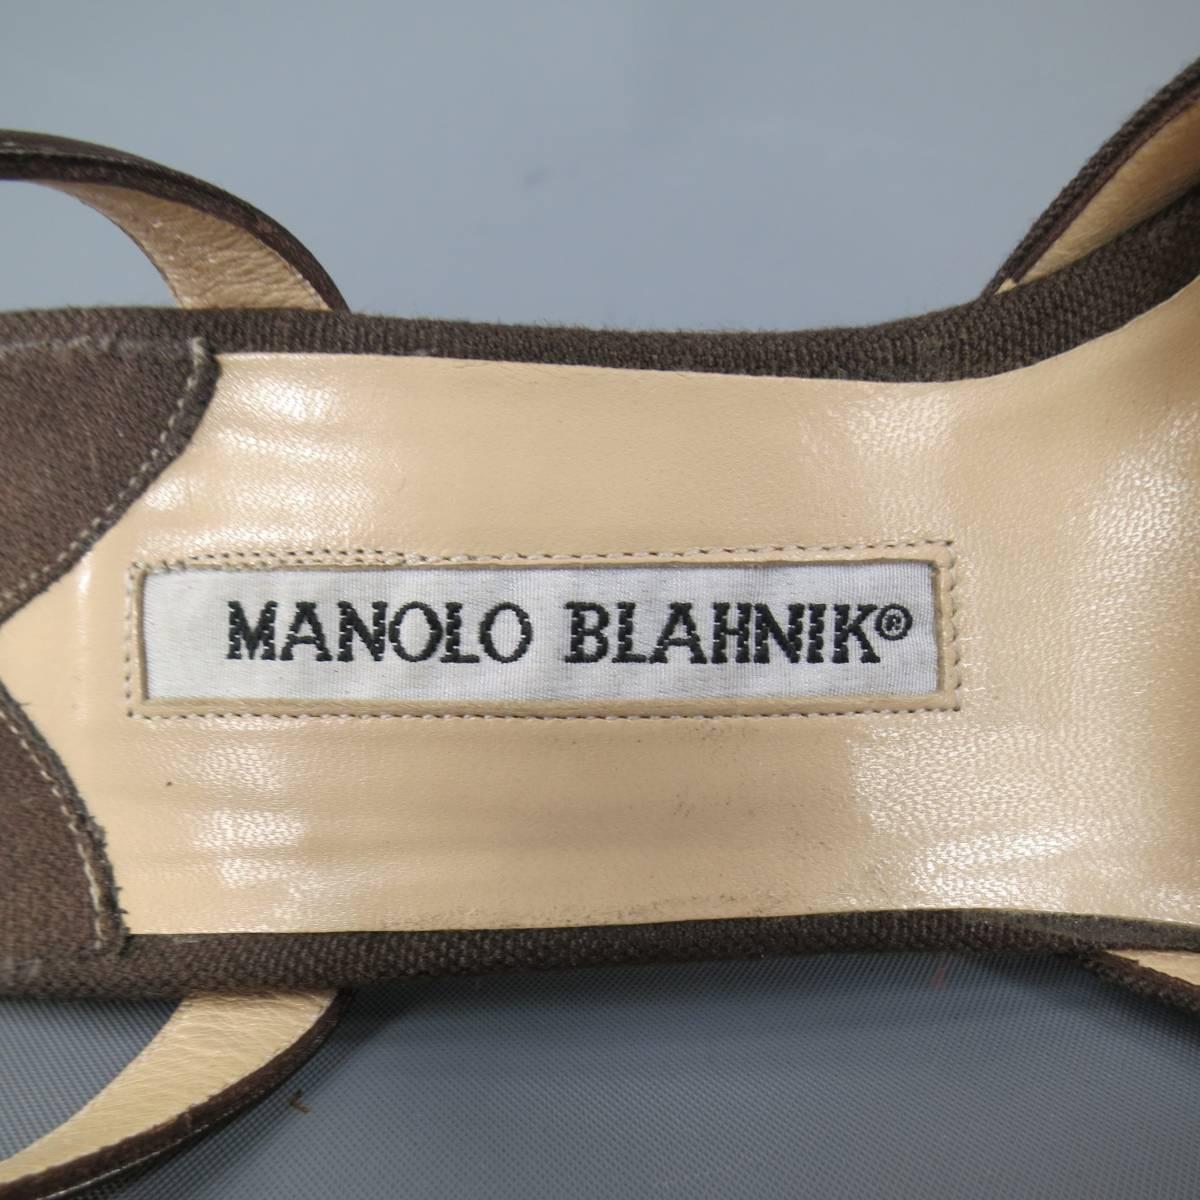 MANOLO BLAHNIK Pumps  - Size 8 Brown Canvas Ankle Strap Sea Shell Heels 4